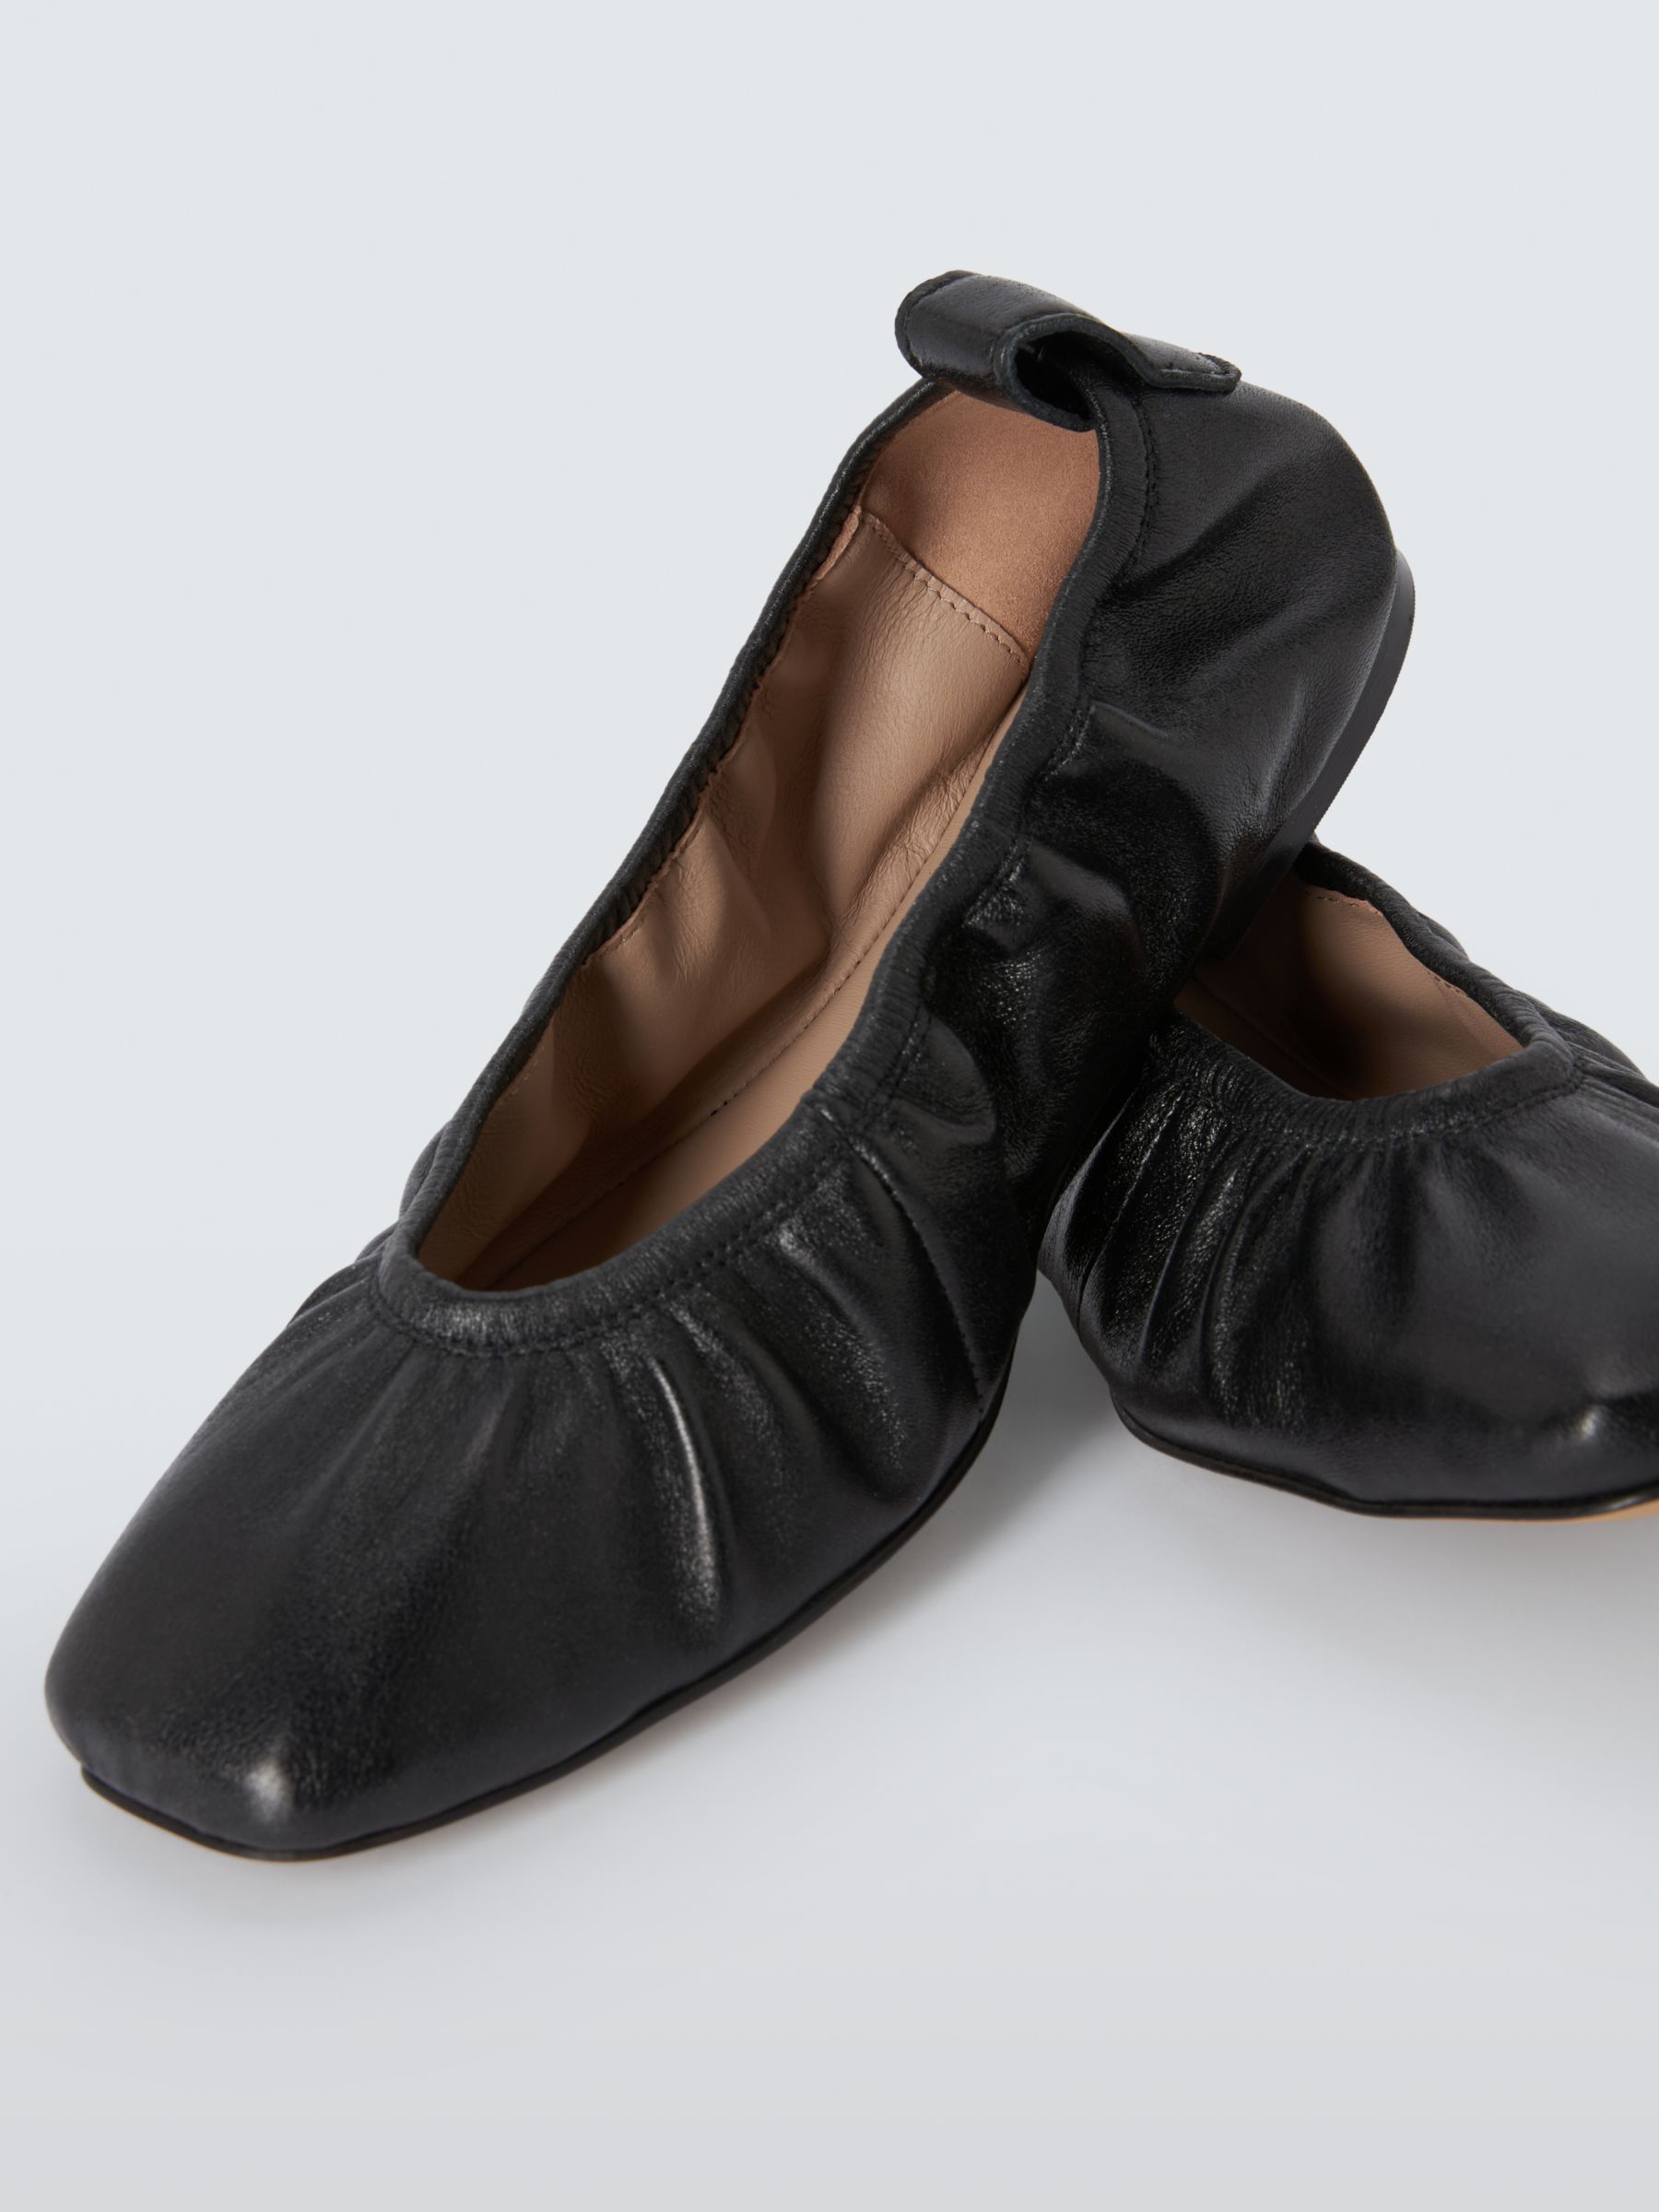 John Lewis Harlequinn Leather Soft Ruched V-Cut Sachetto Ballerina Pumps, Black, 6